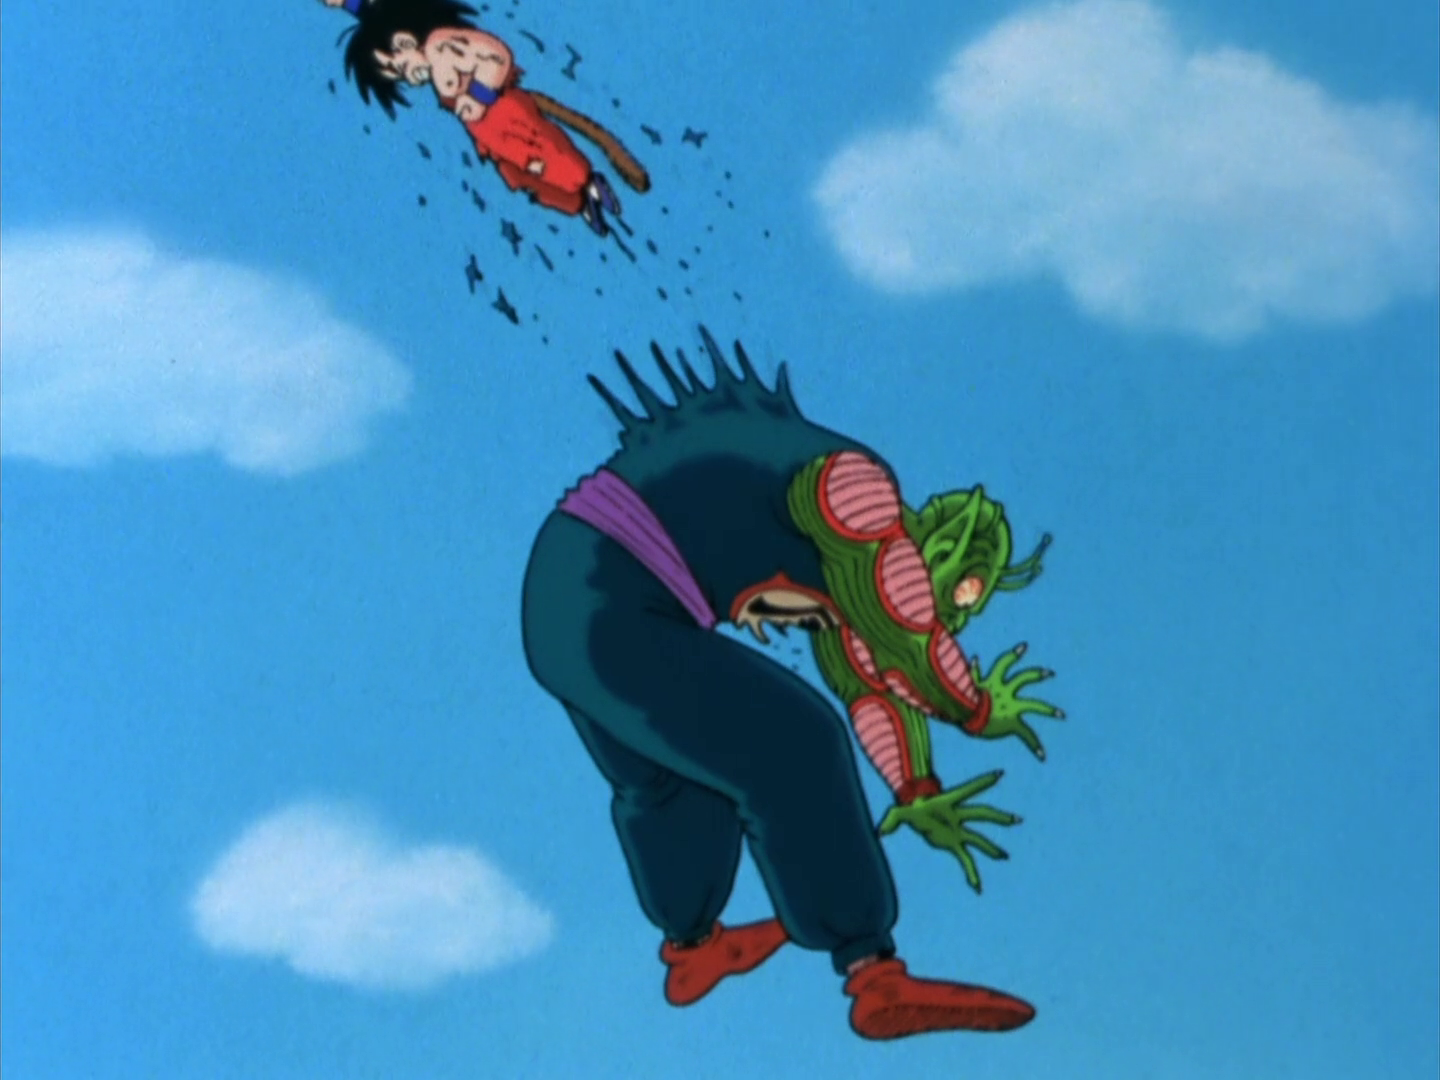 Dragon Ball: Revenge of King Piccolo - Wikipedia